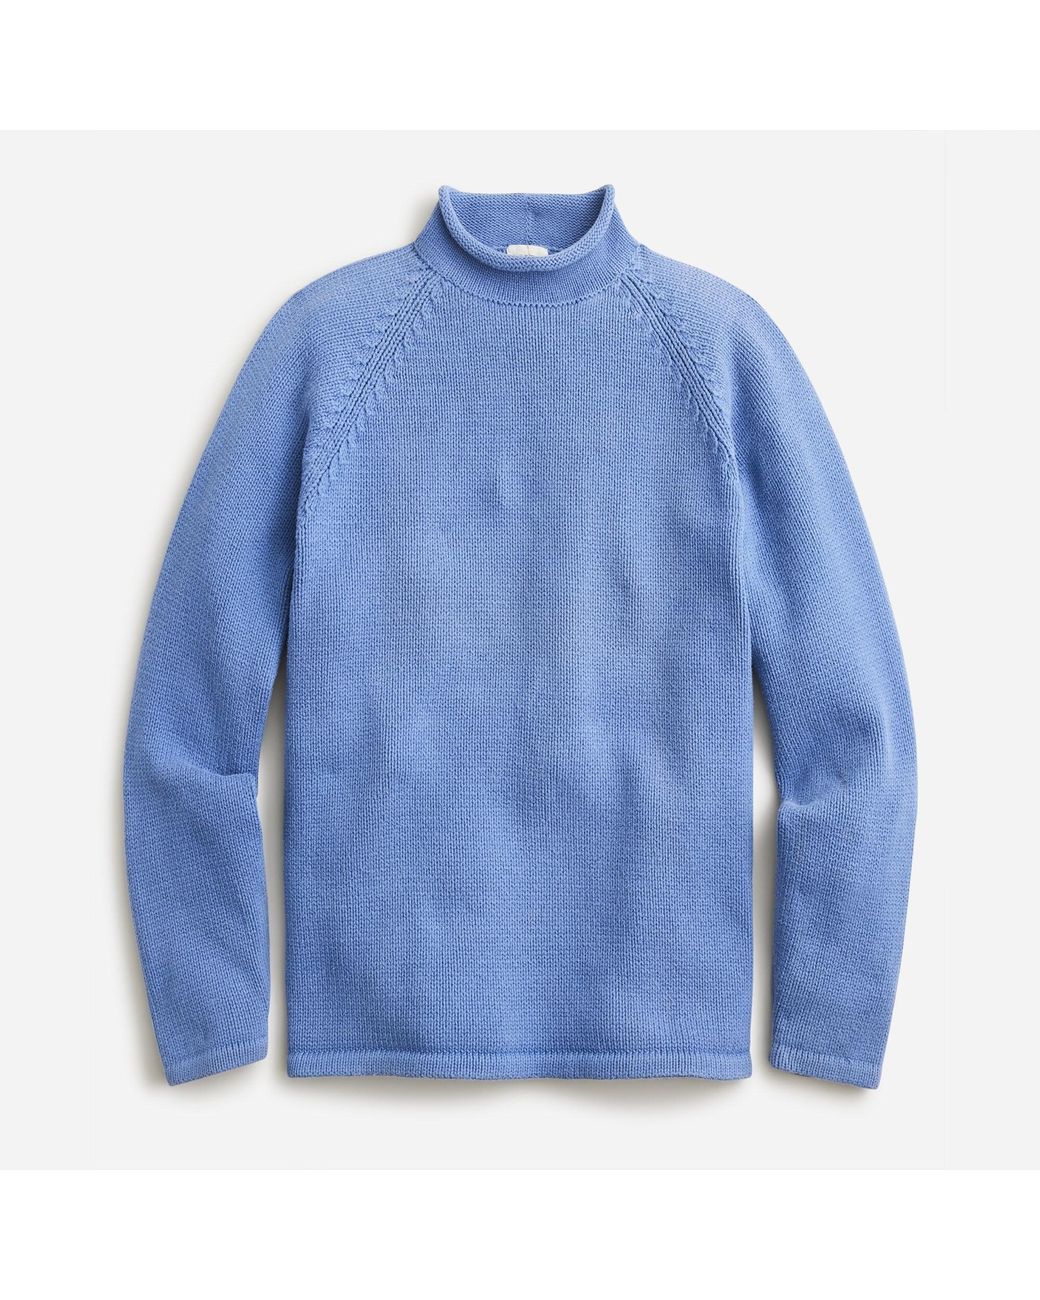 J.Crew Vintage '90s Unisex Cotton Rollnecktm Sweater in Blue | Lyst